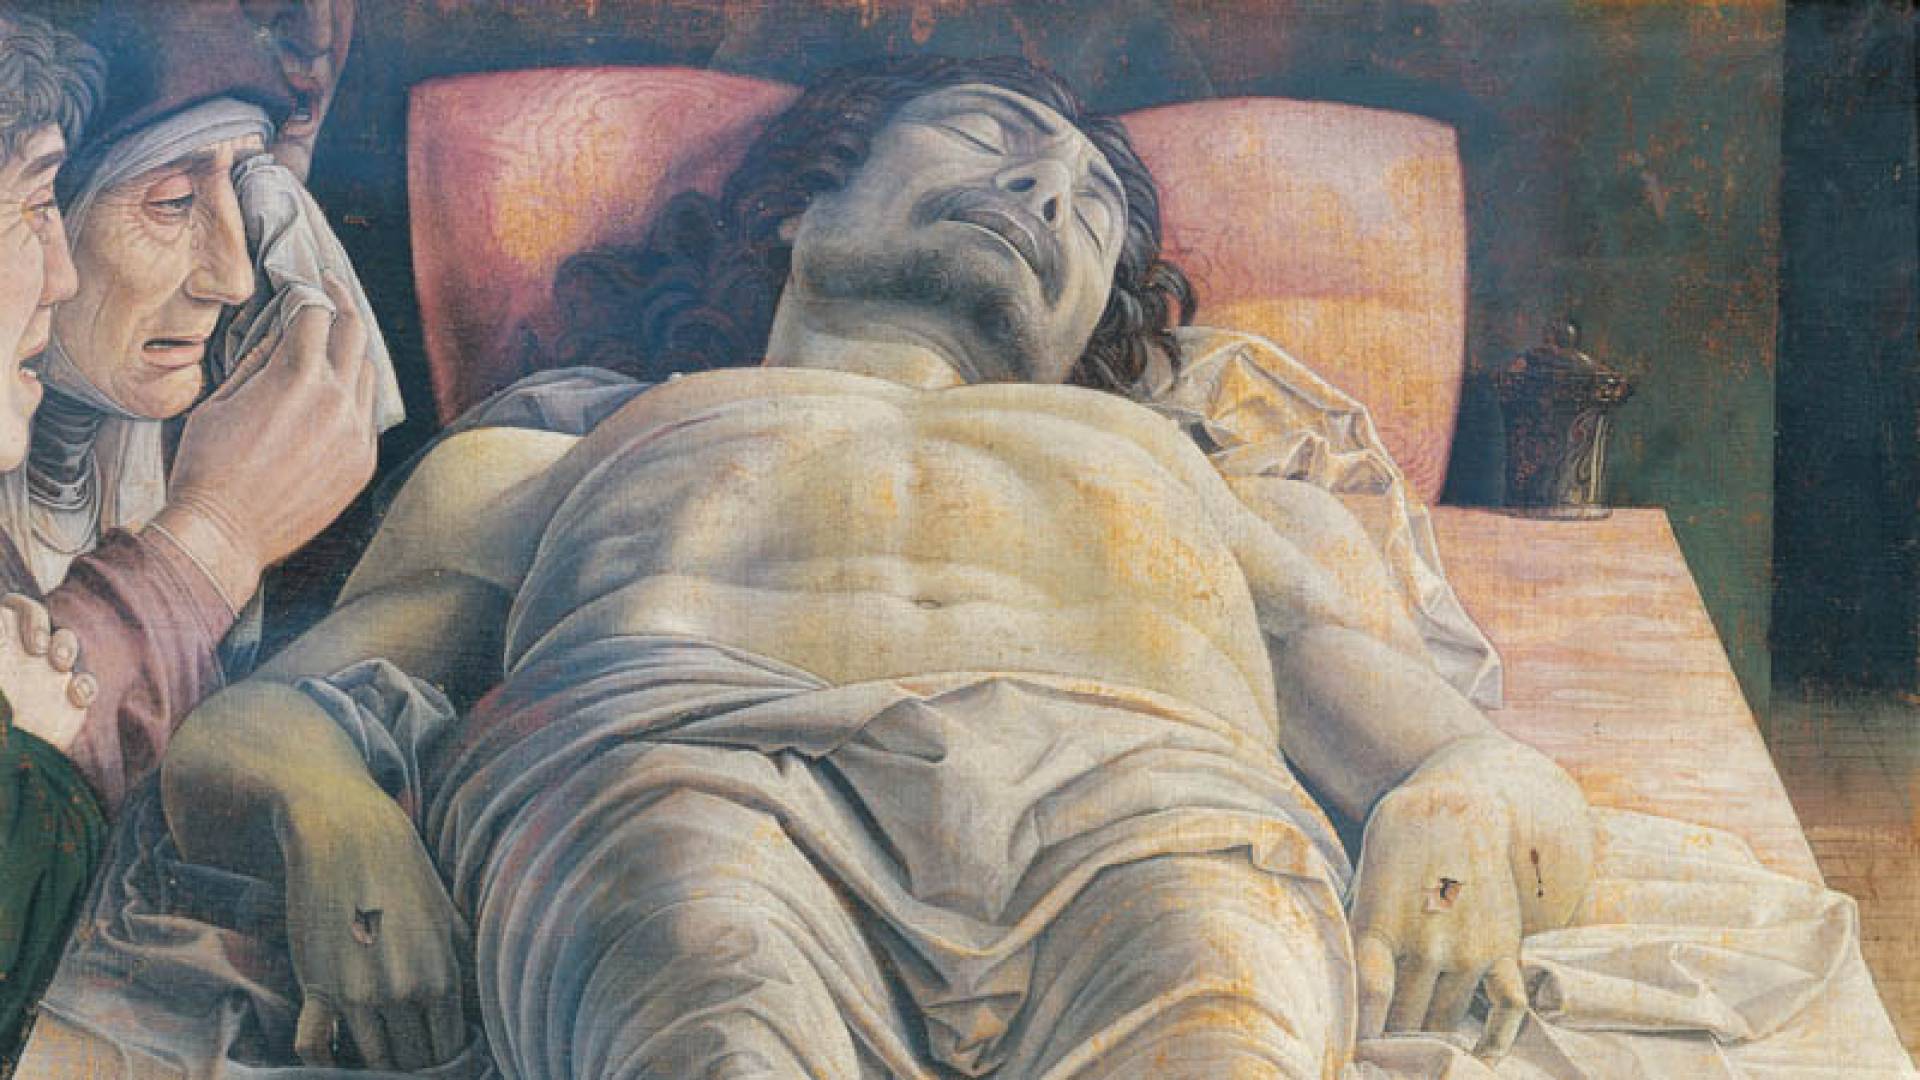 BRERA, A. Mantegna - Dead Christ